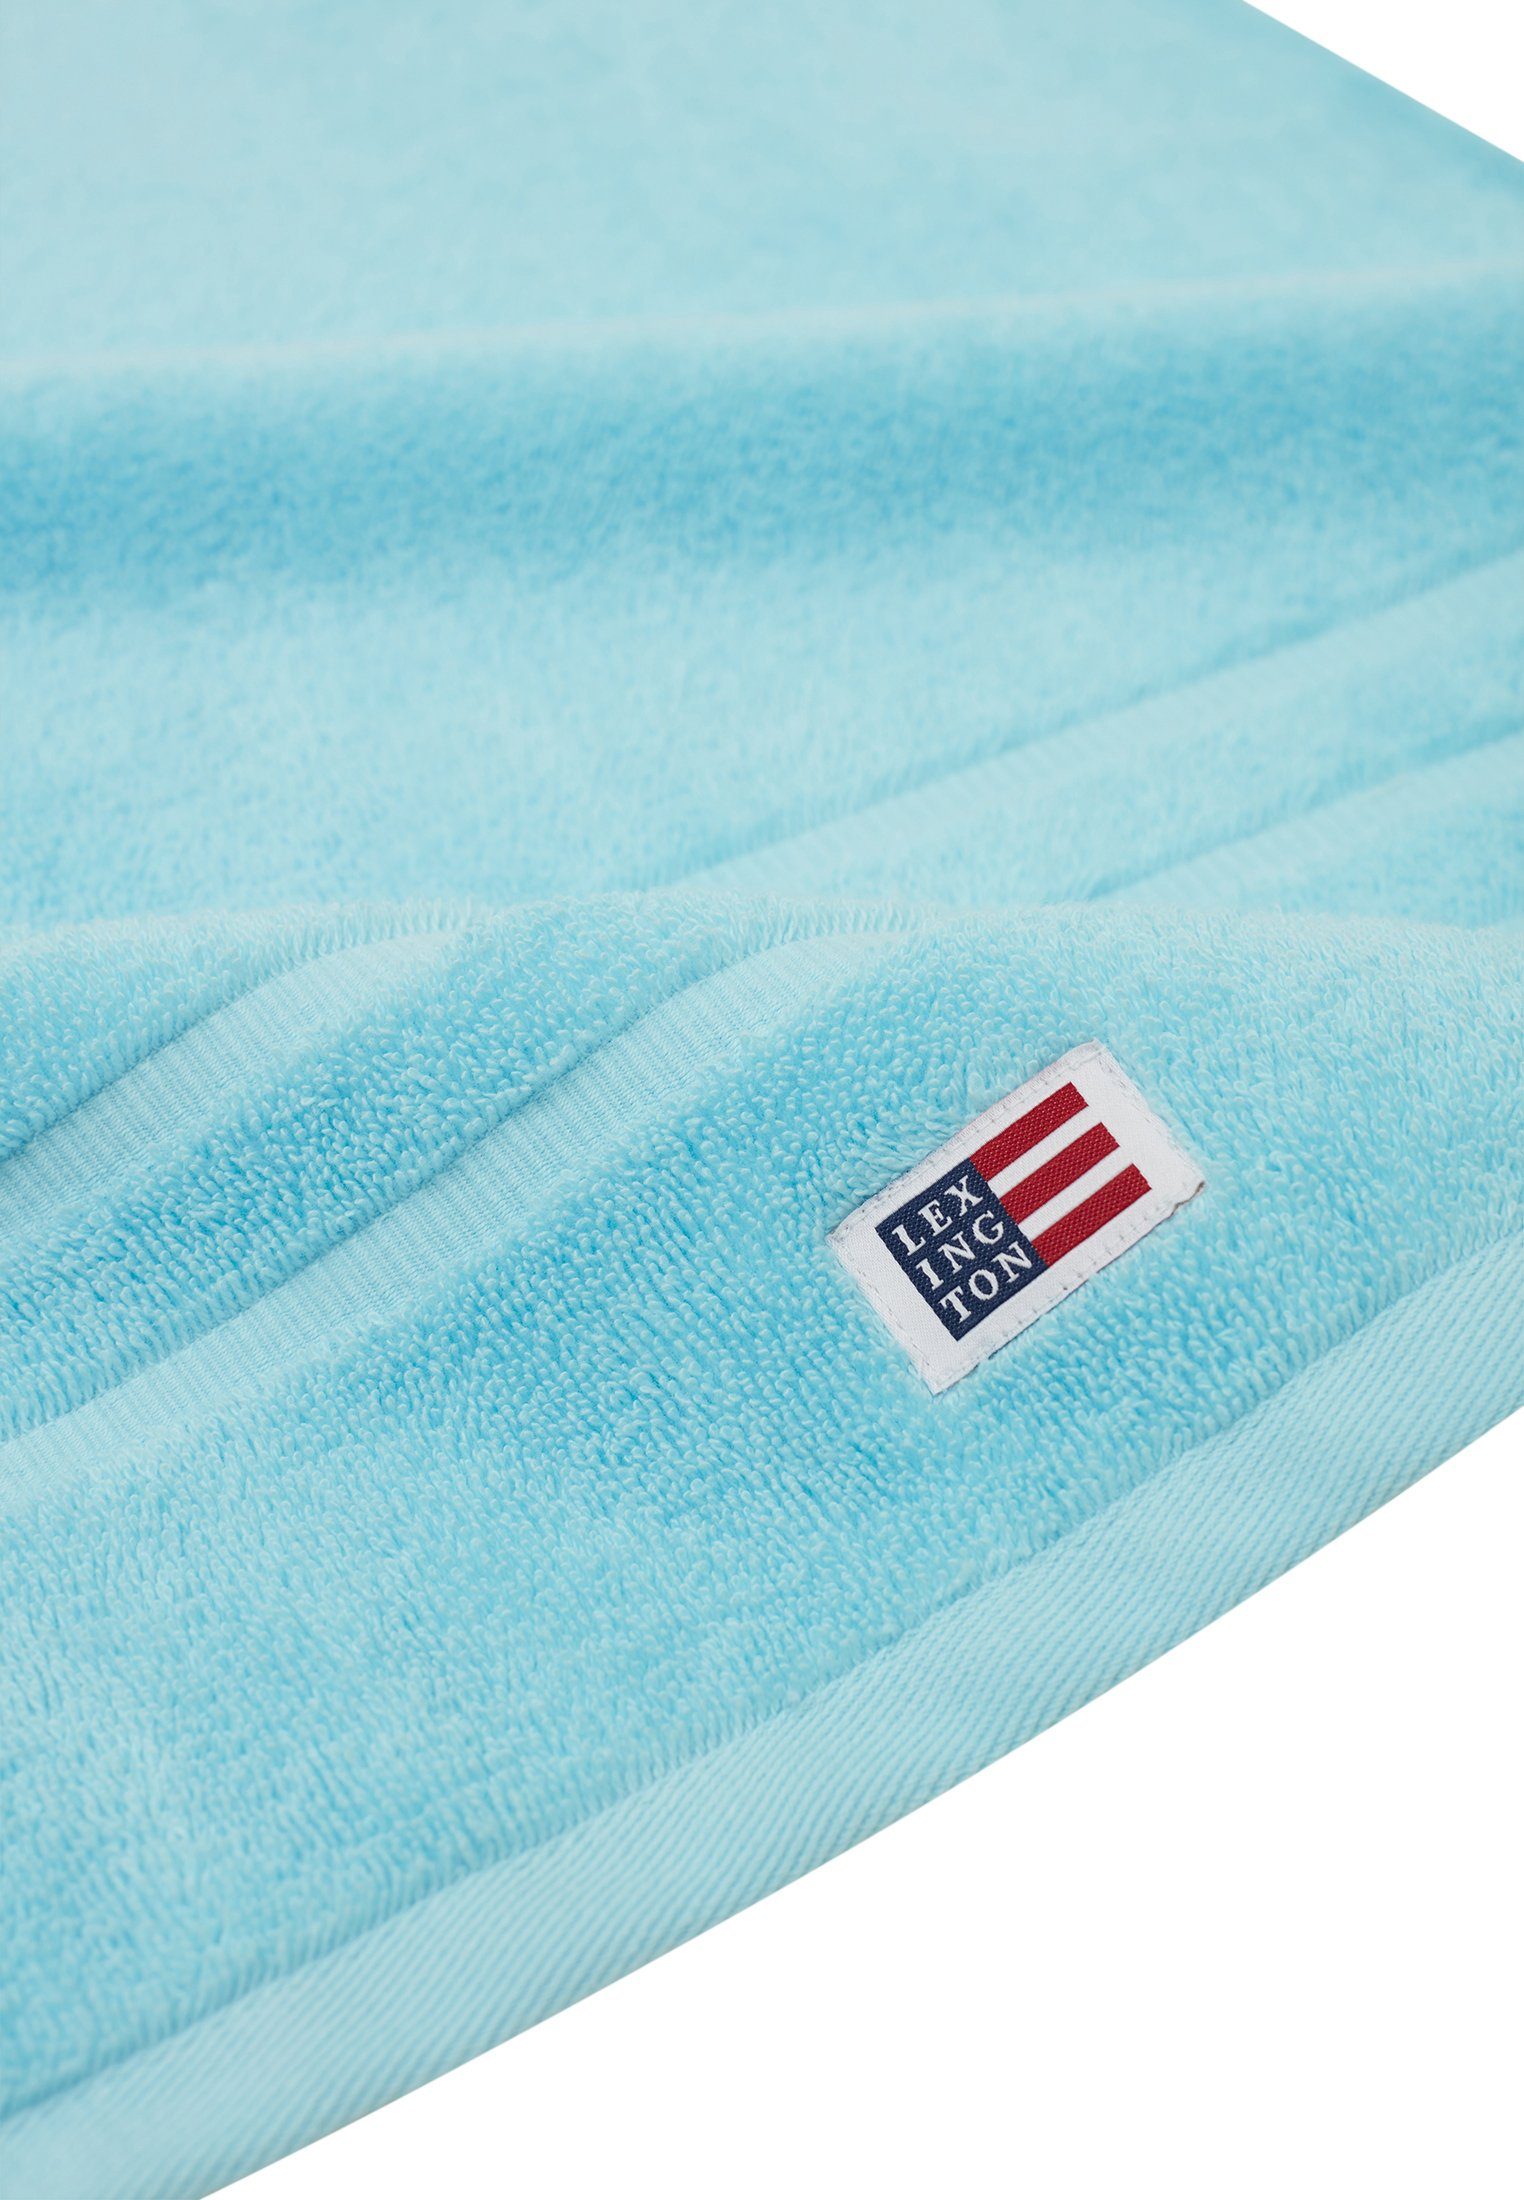 Handtuch Towel Lexington Original turquoise